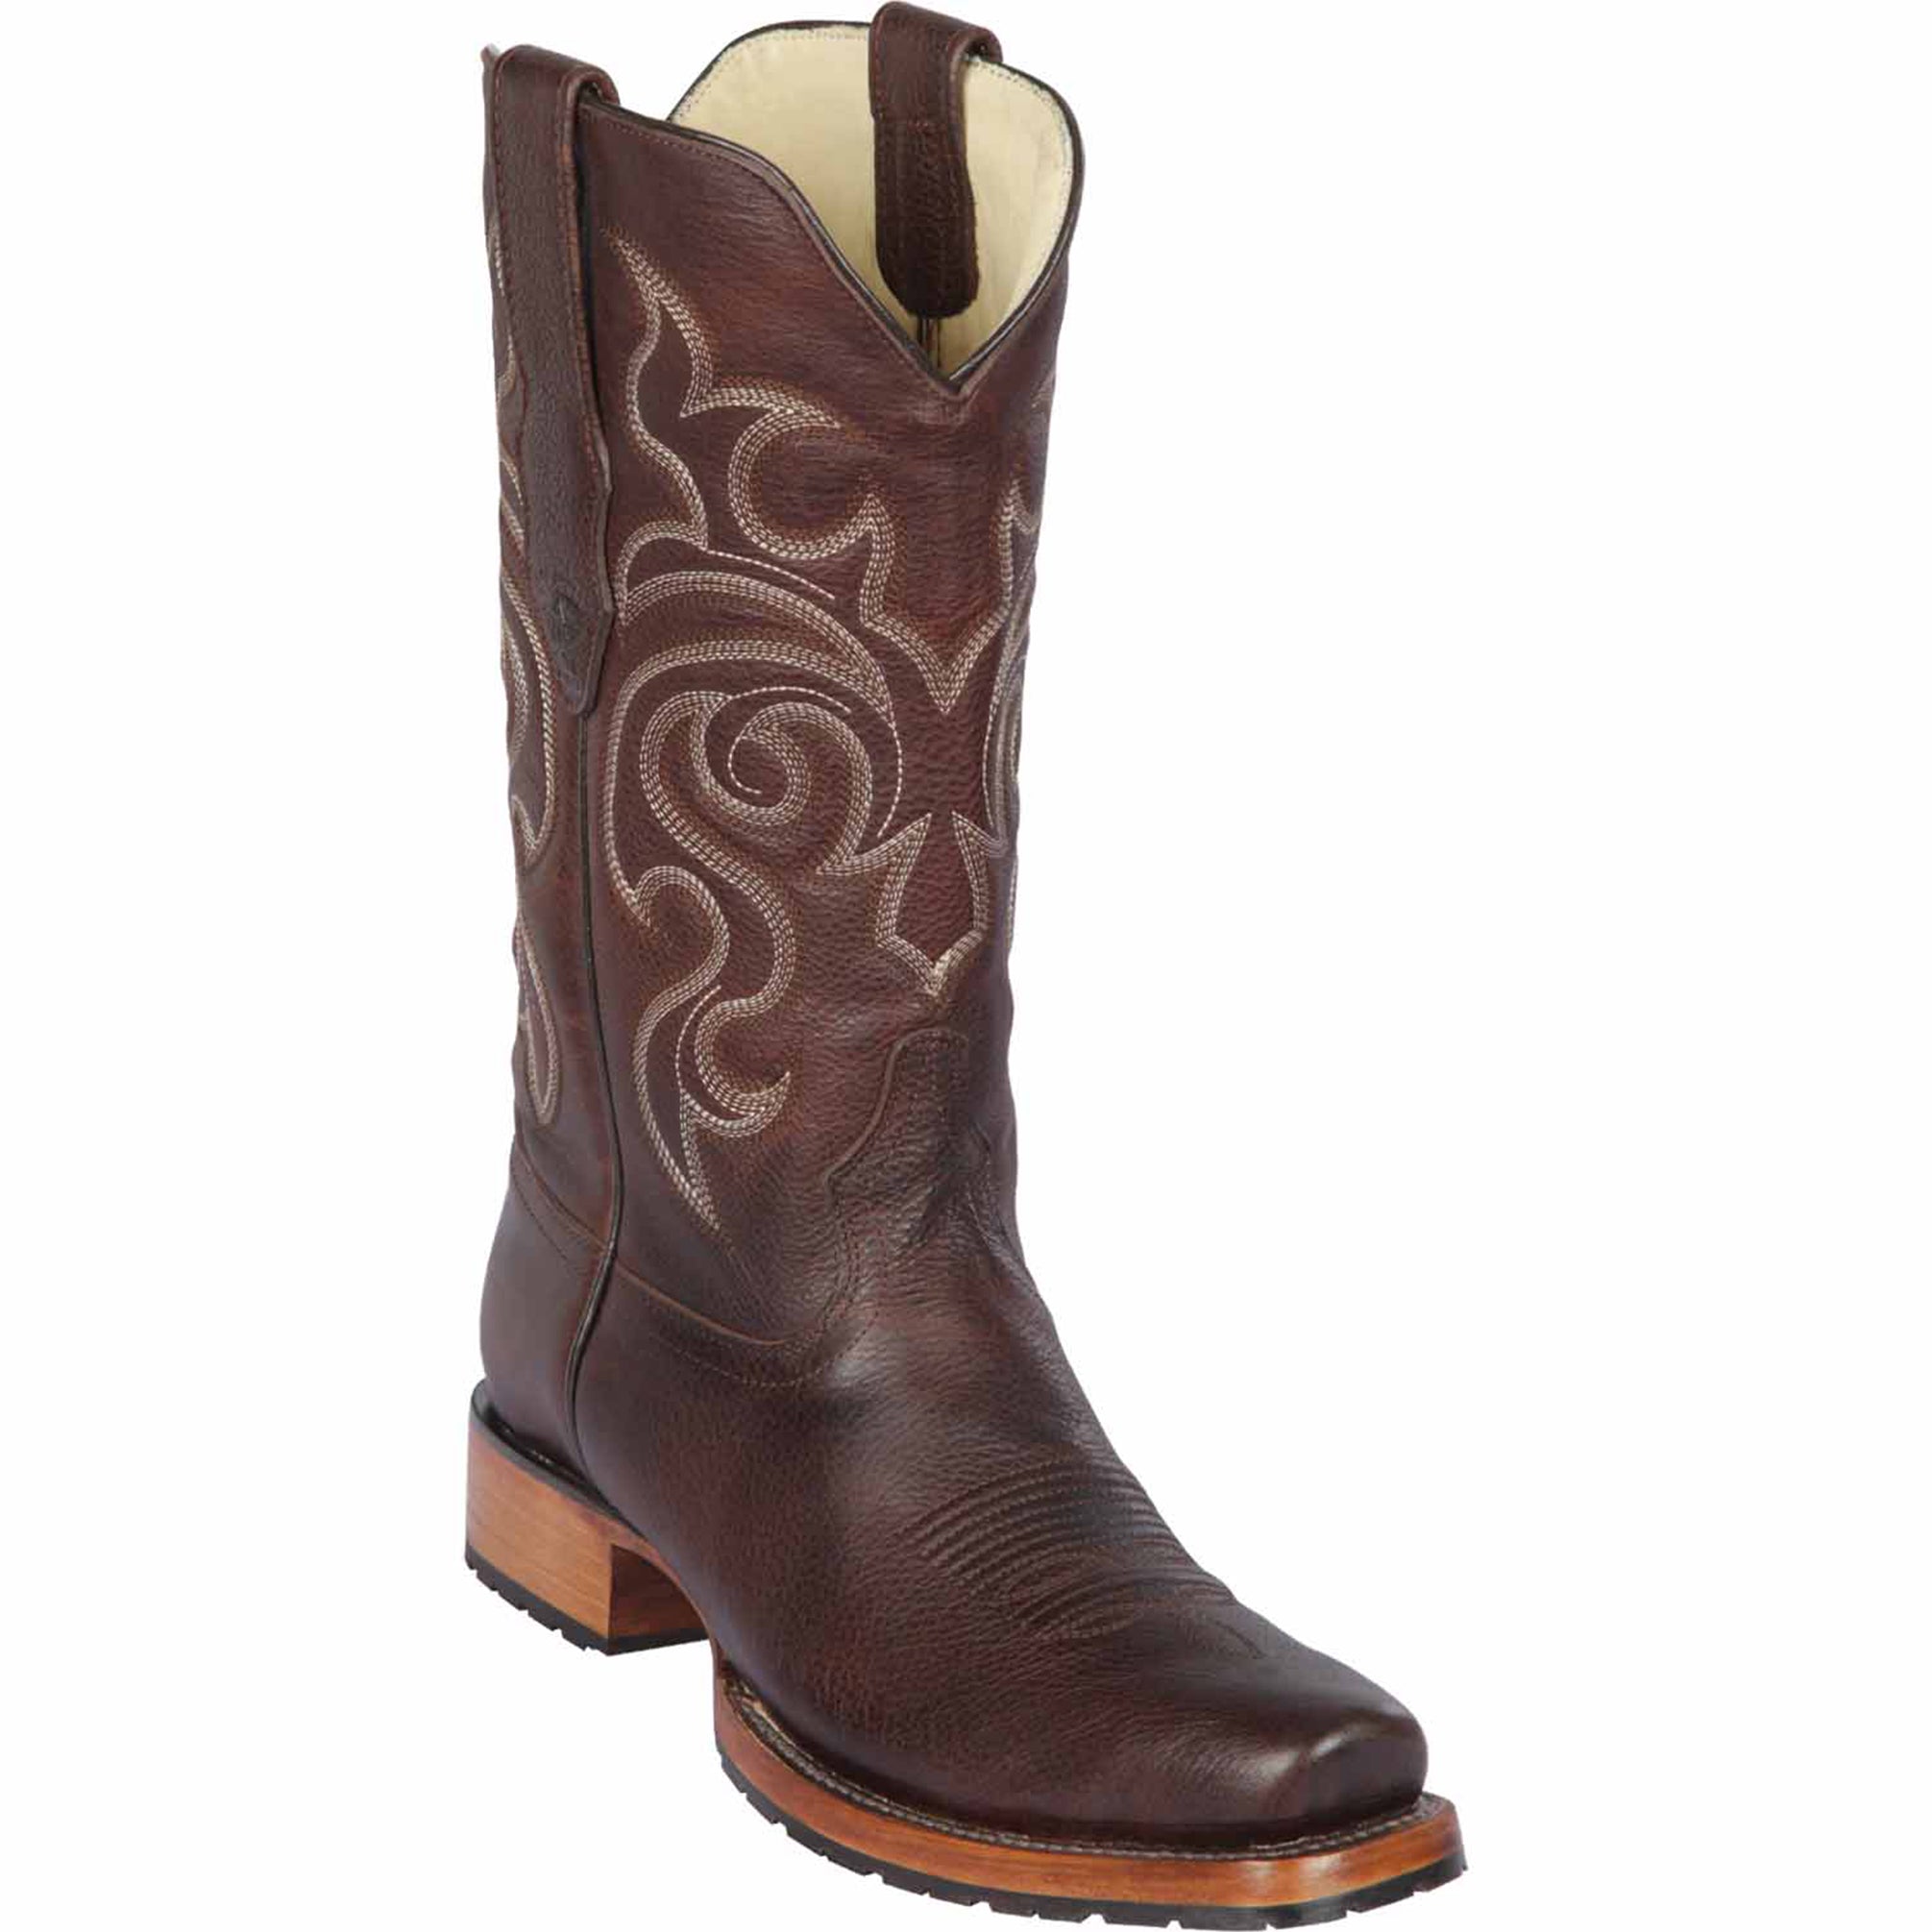 Brown Square Toe Cowboy Boots - Los Altos Boots